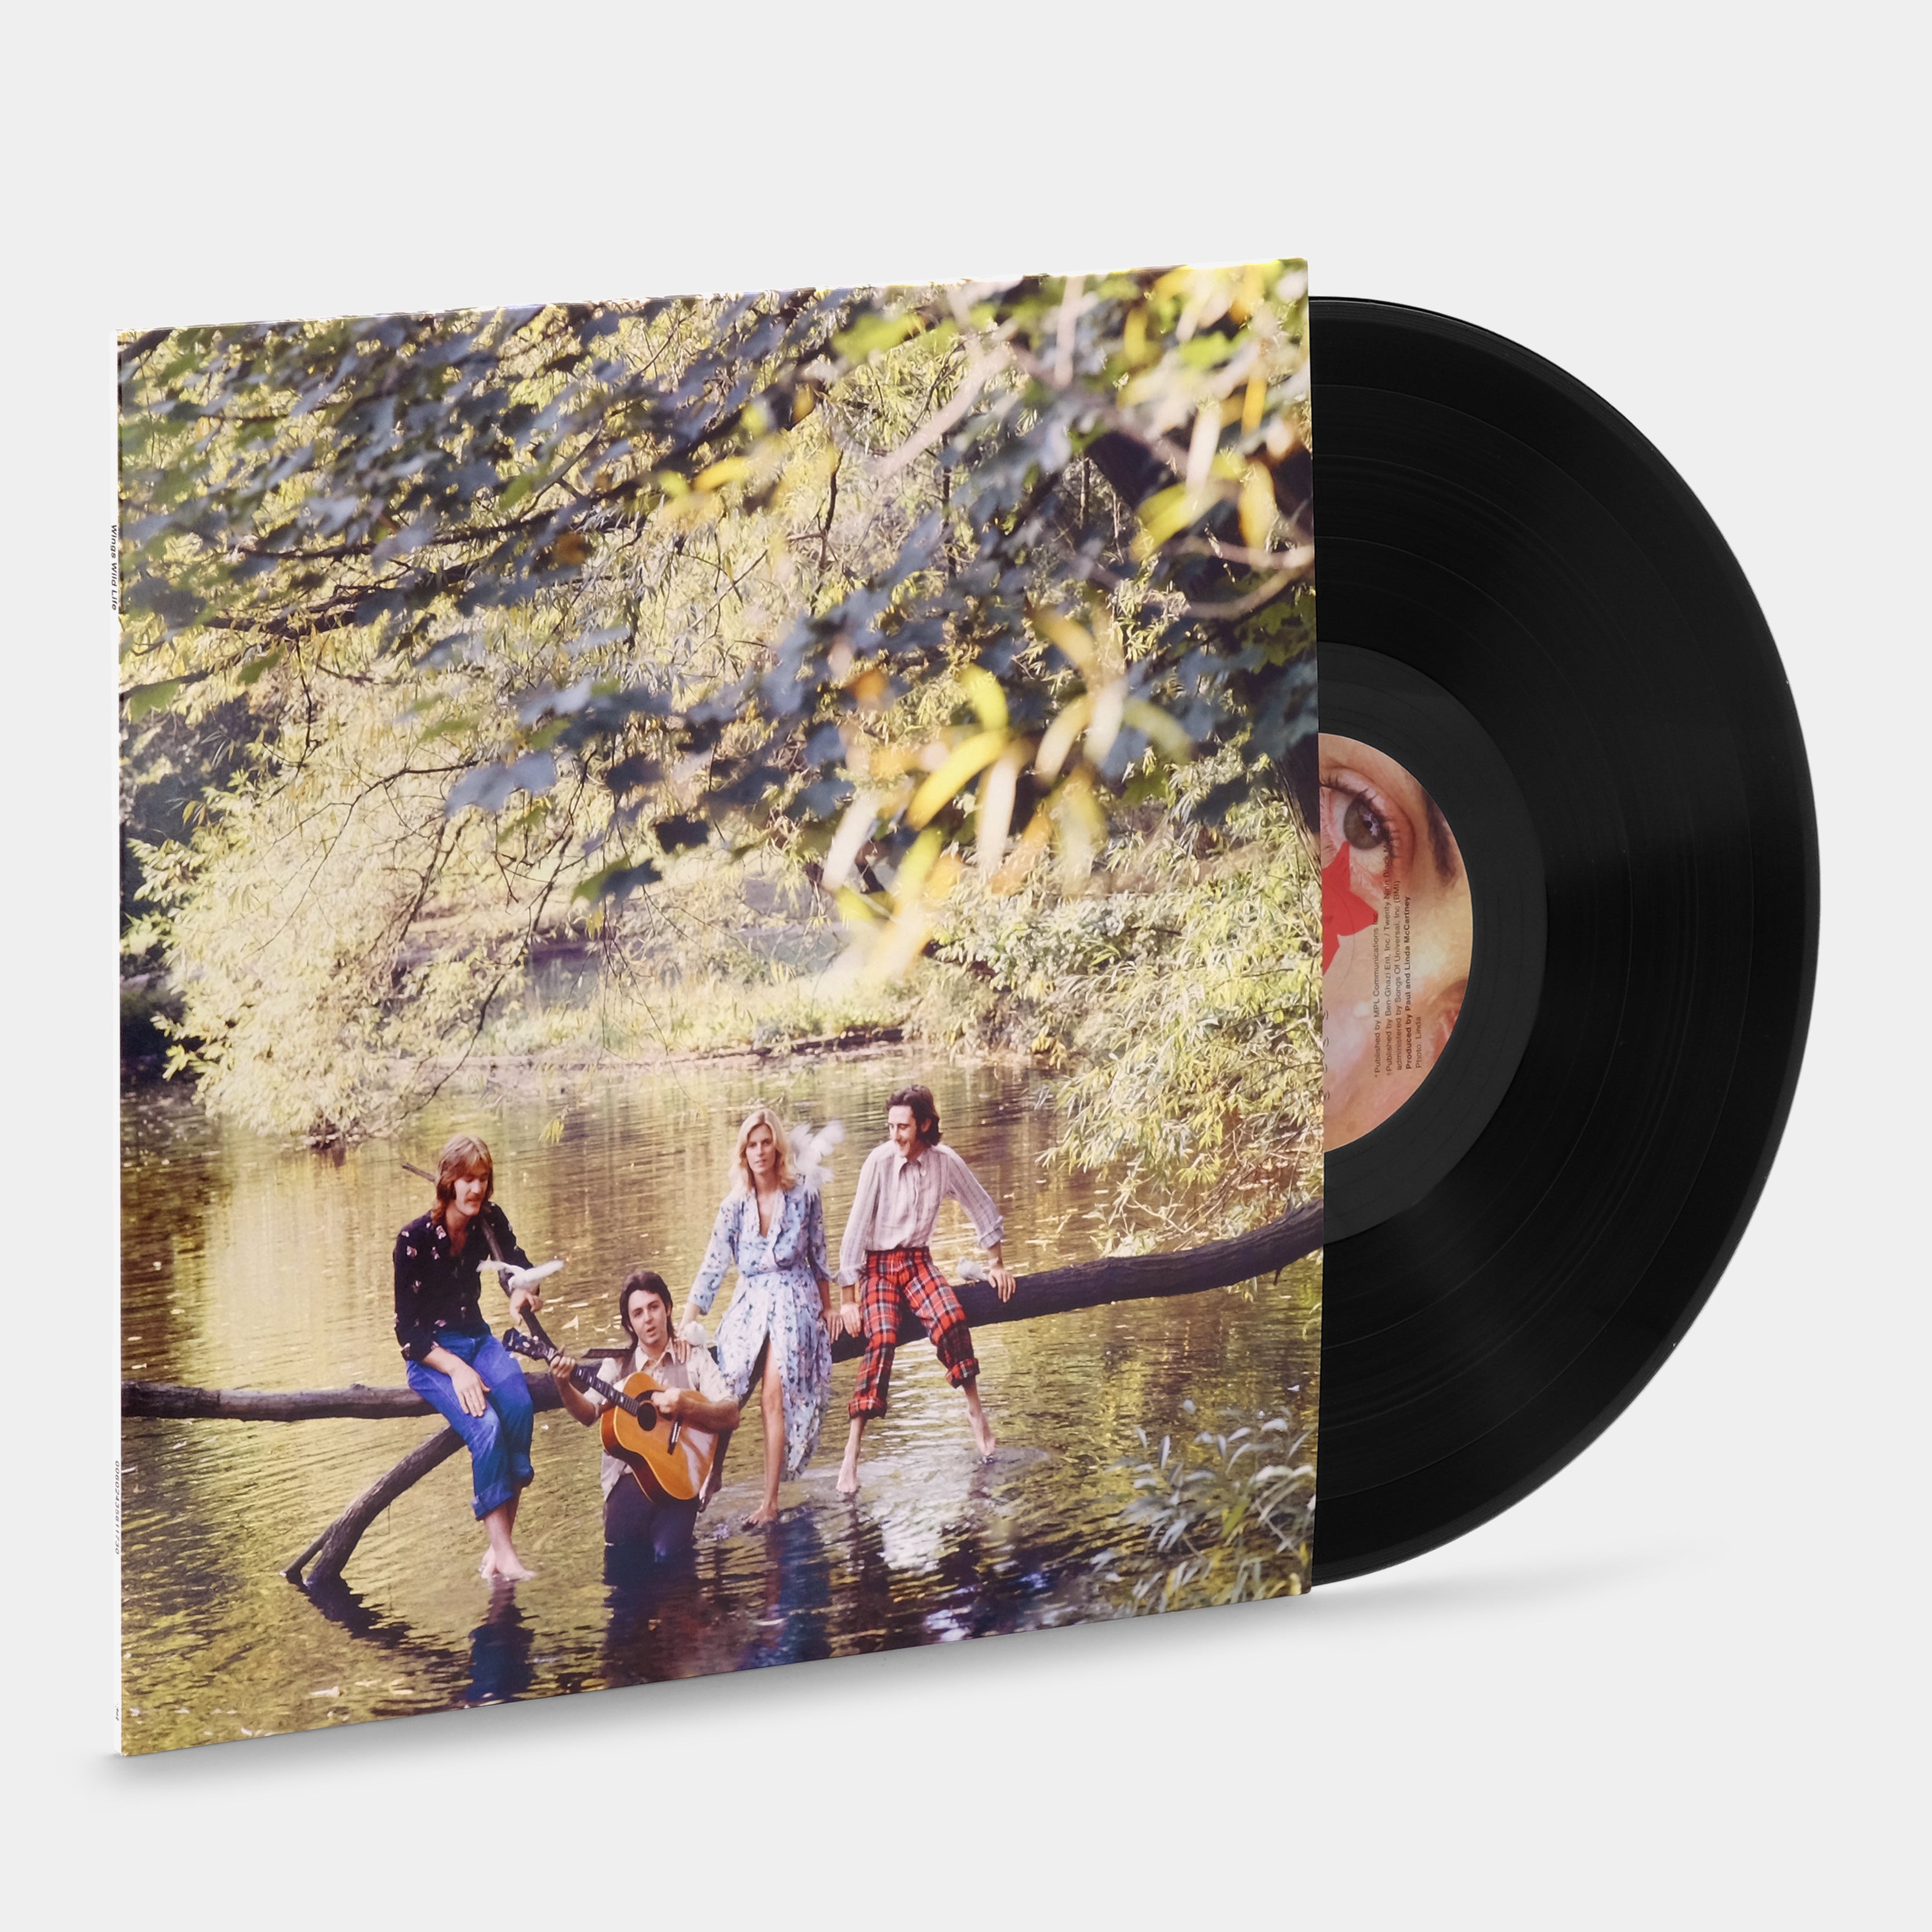 Paul McCartney and Wings - Wild Life (Half-Speed Mastering) LP Vinyl Record